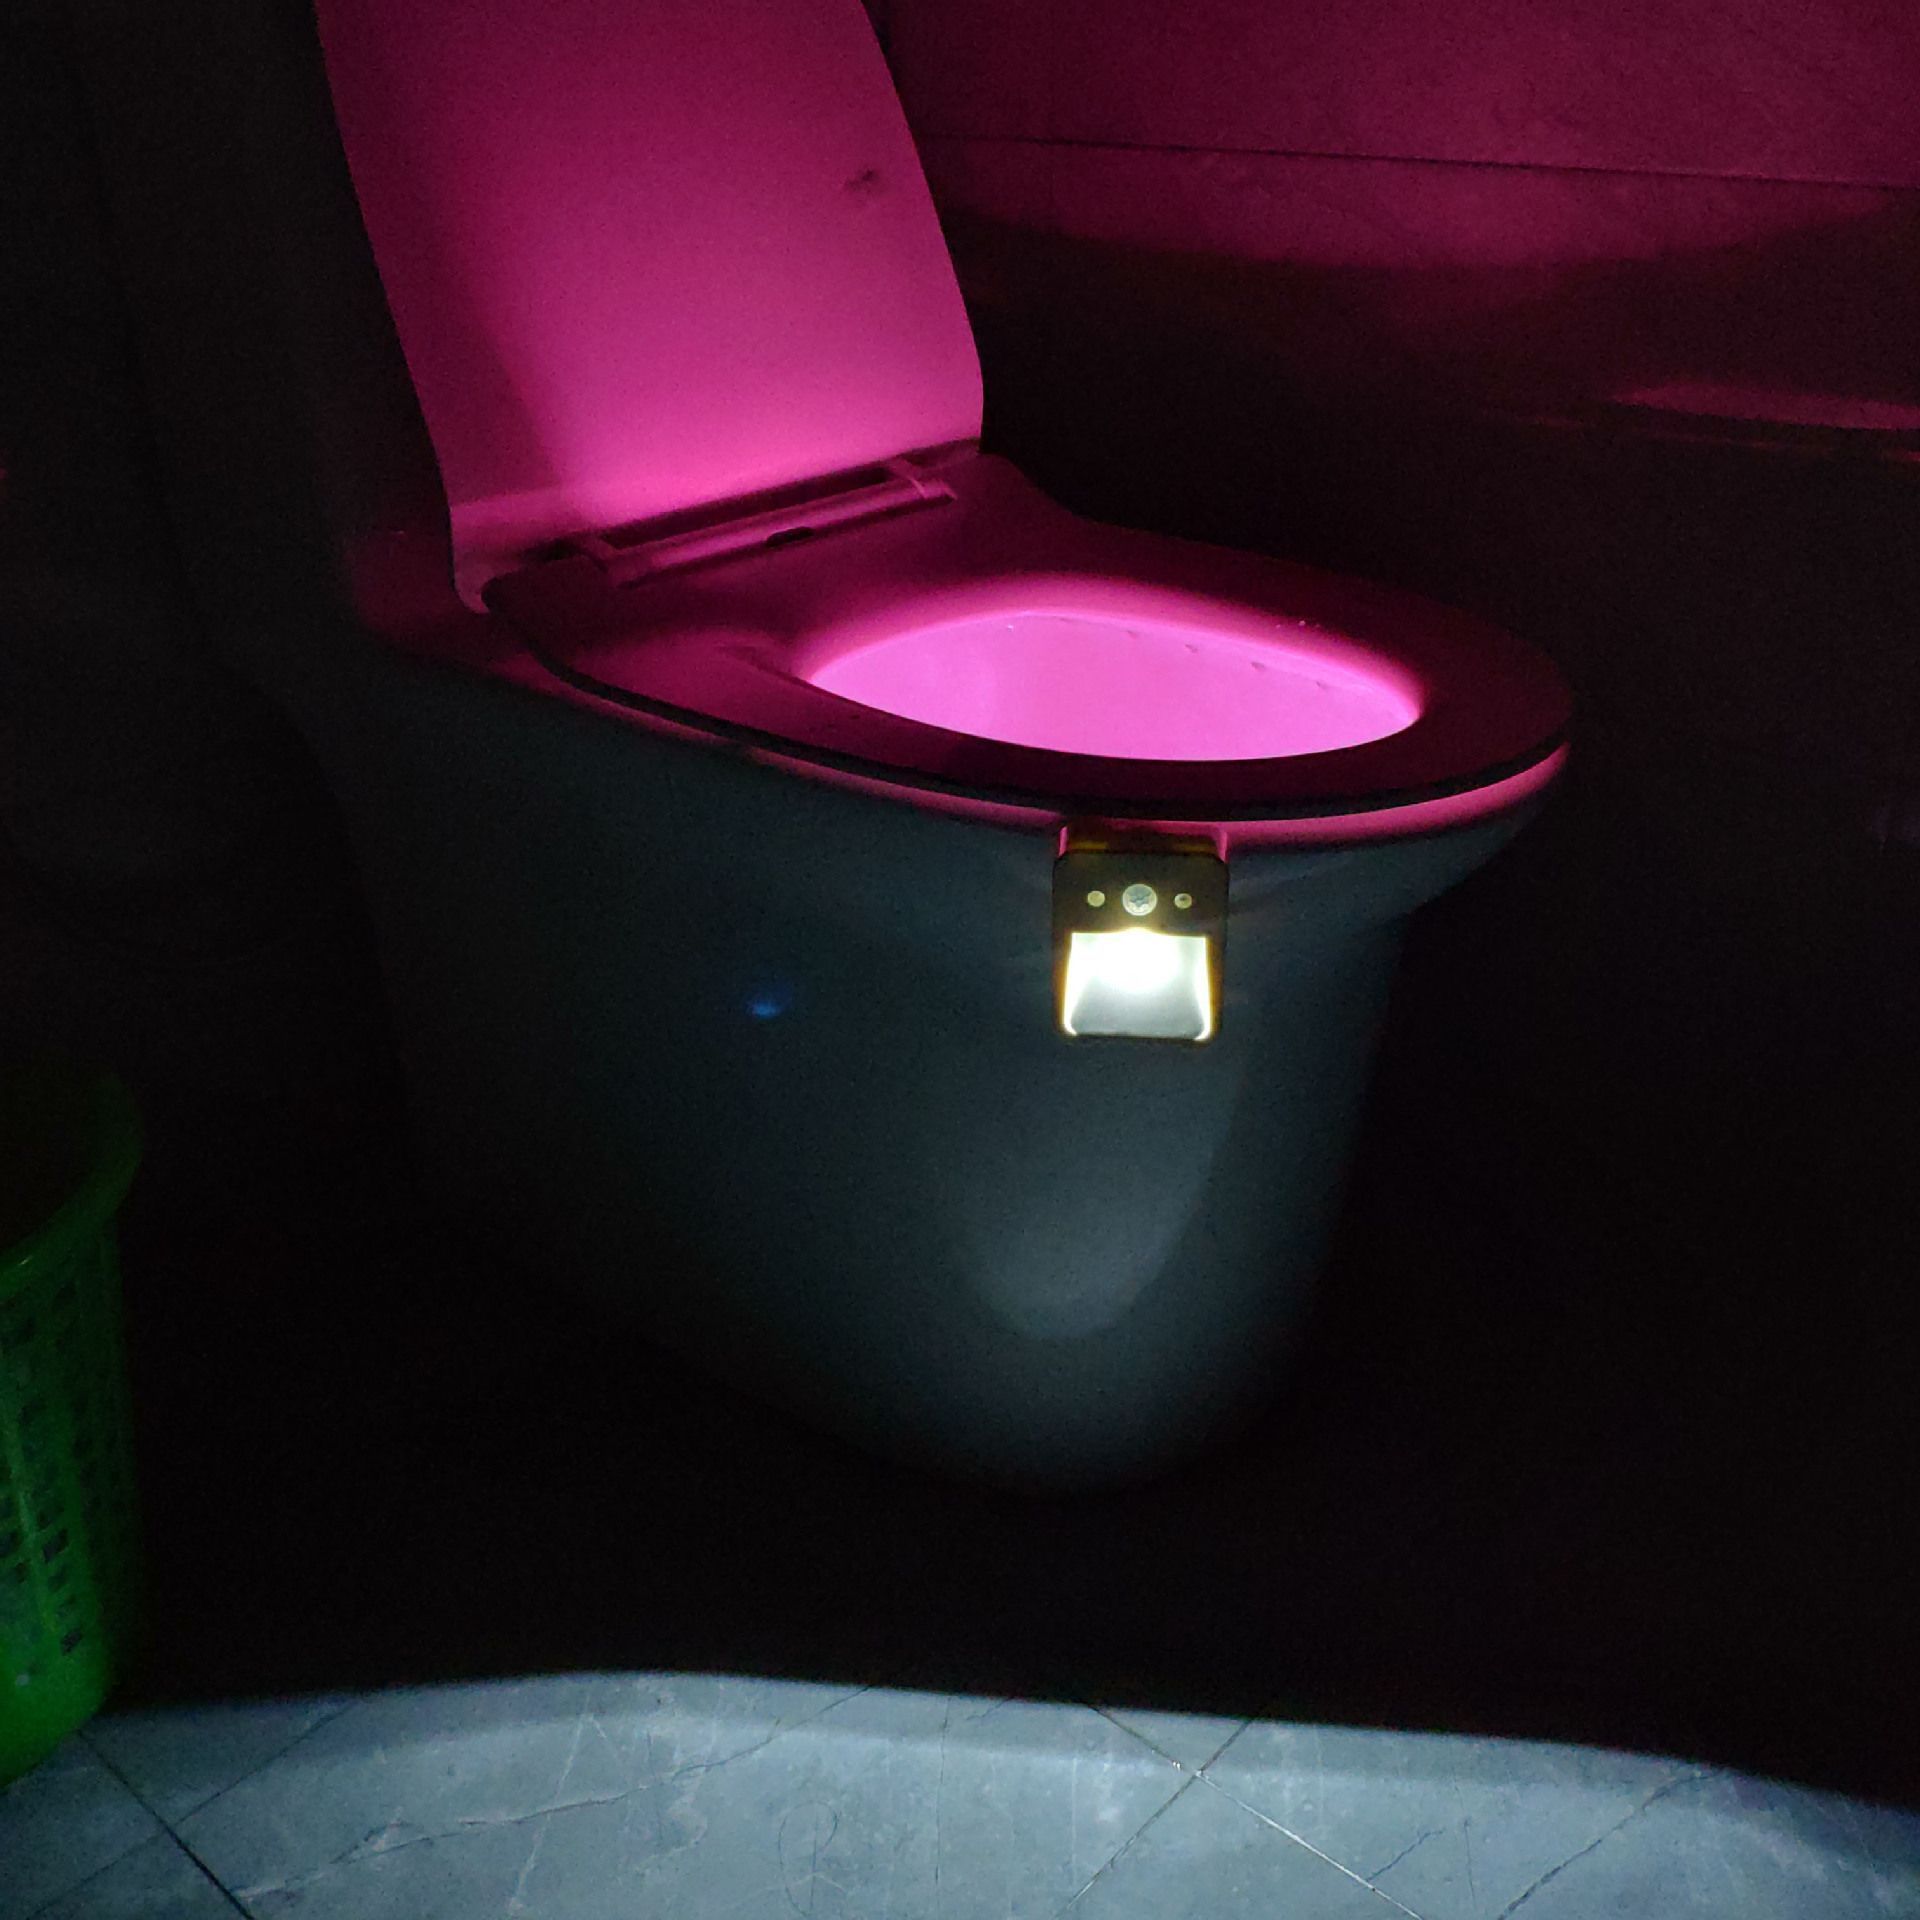 16-Colors-LED-Induction-Toilet-Light-With-Aromatherapy-Toilet-Sensor-Night-Light-Decor-1754296